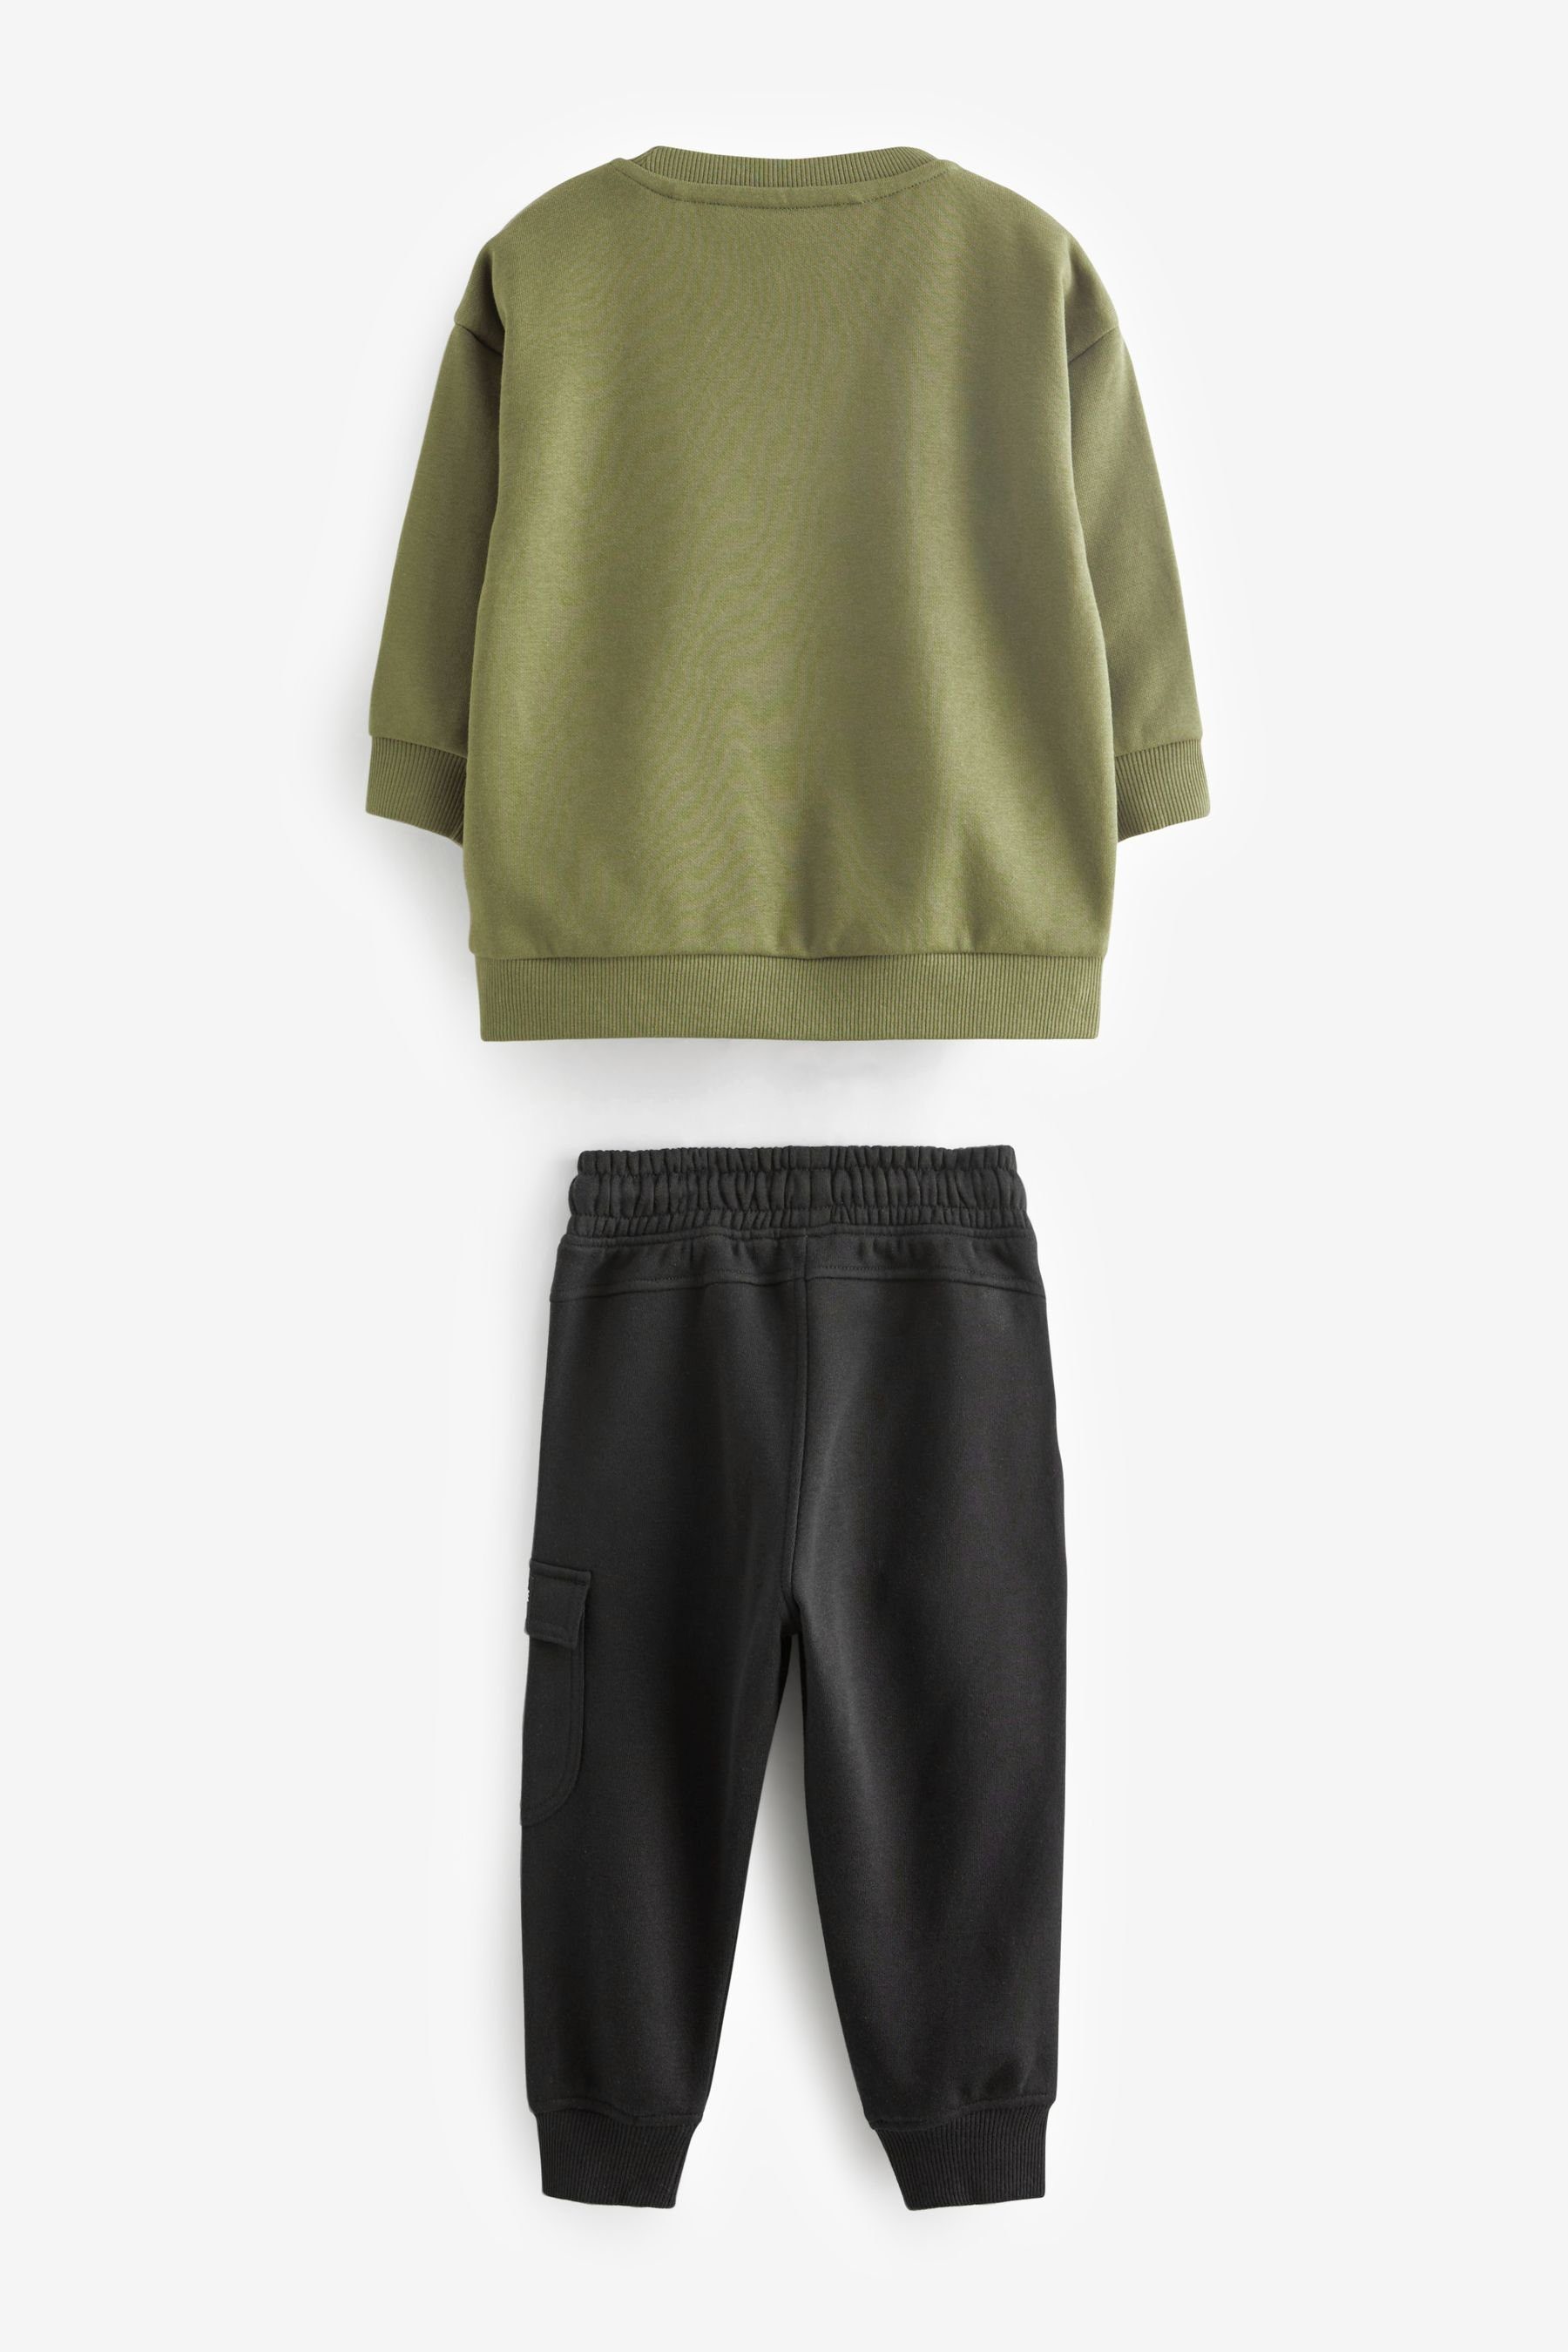 Next Sweatanzug Sweatshirt und Set (2-tlg) Drippy Motiv Bear mit im Khaki Jogginghose Green/Black